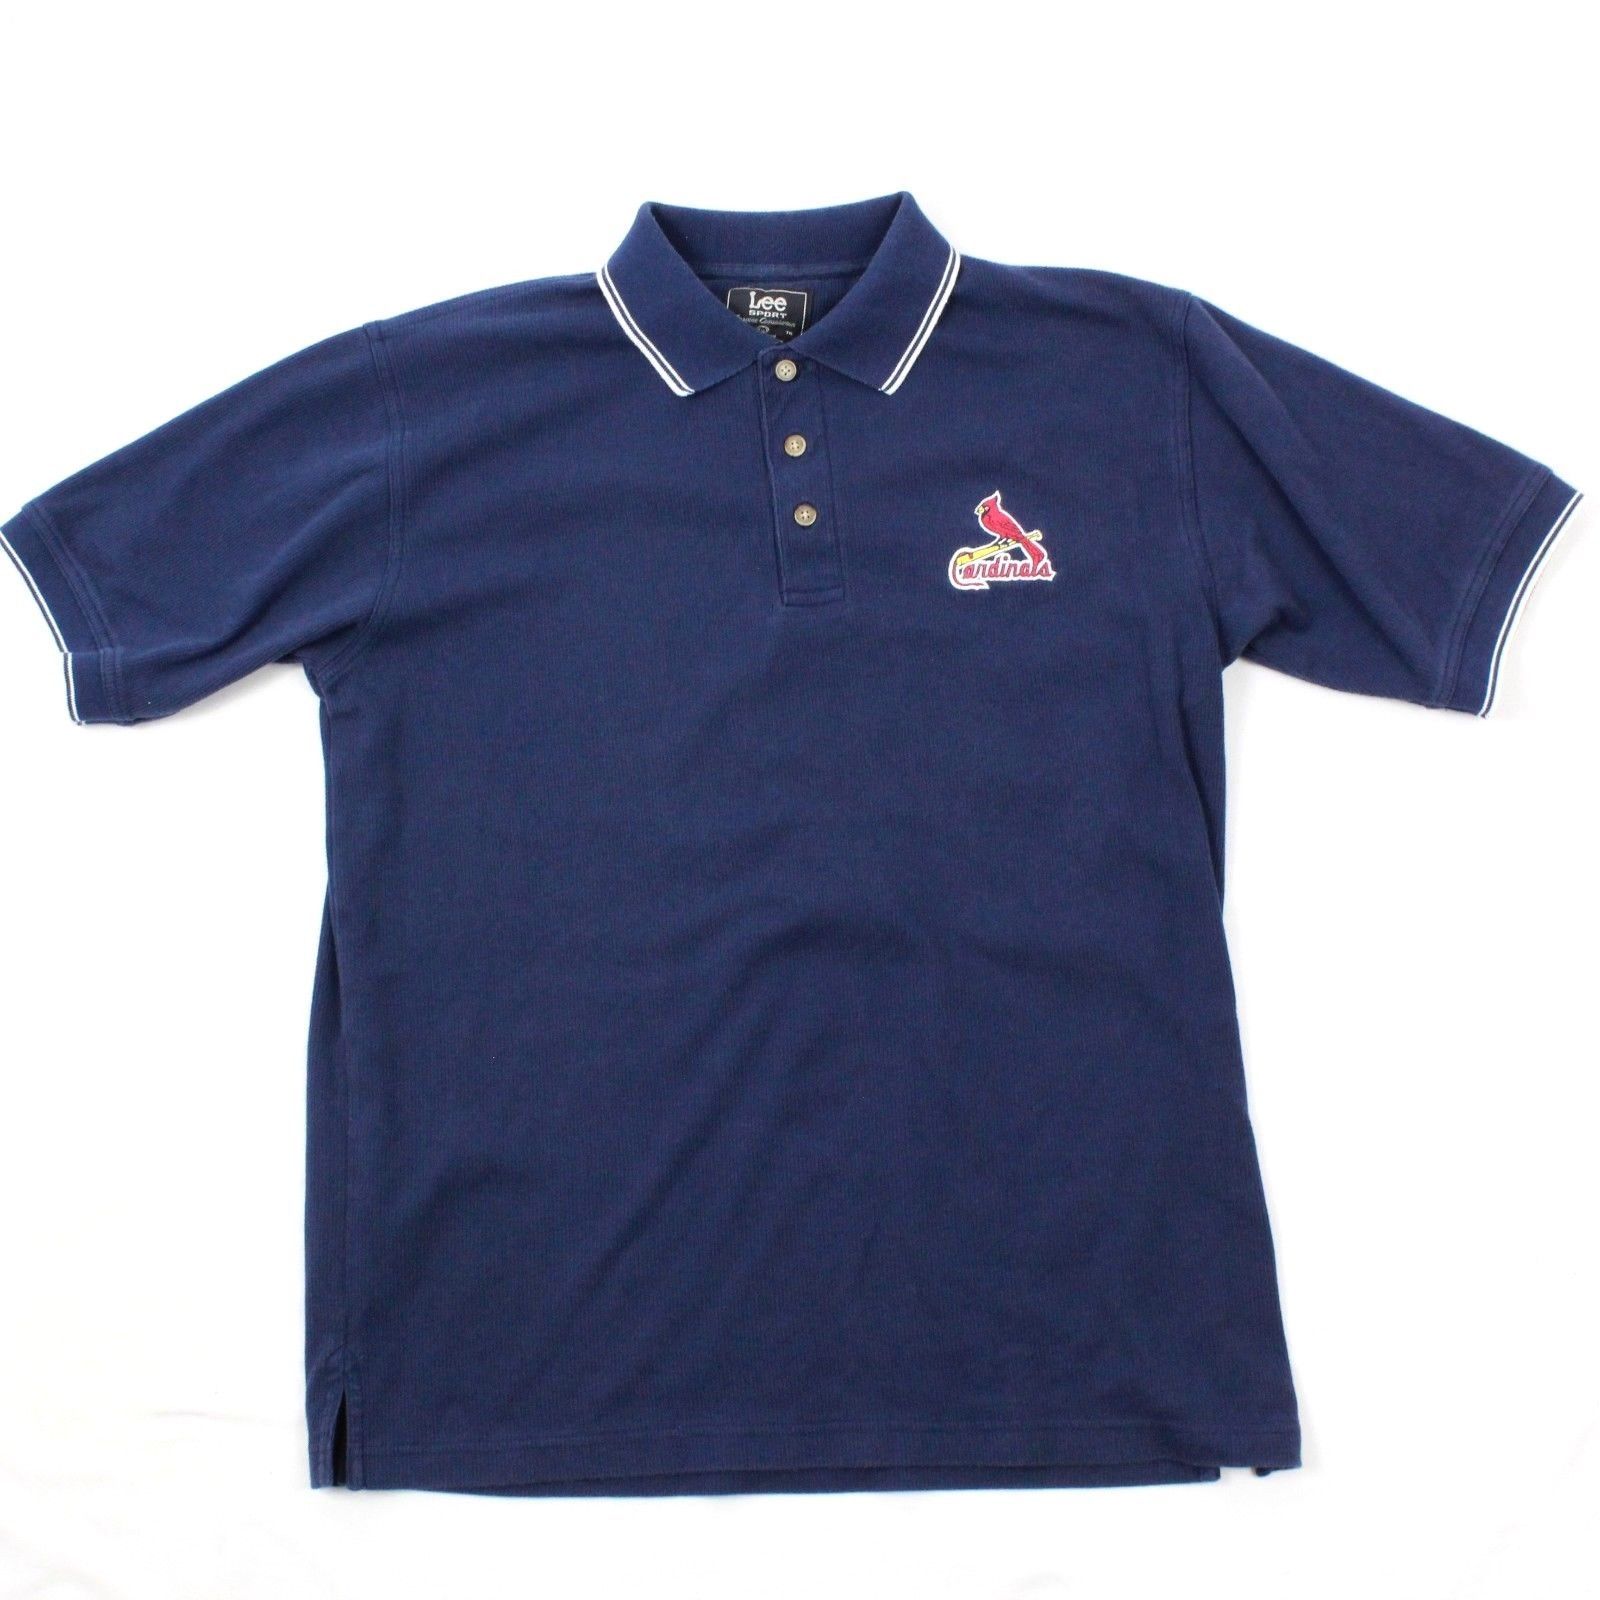 LEE Sport Cardinals Polo Shirt Navy Blue MLB Baseball Team Monogram ...